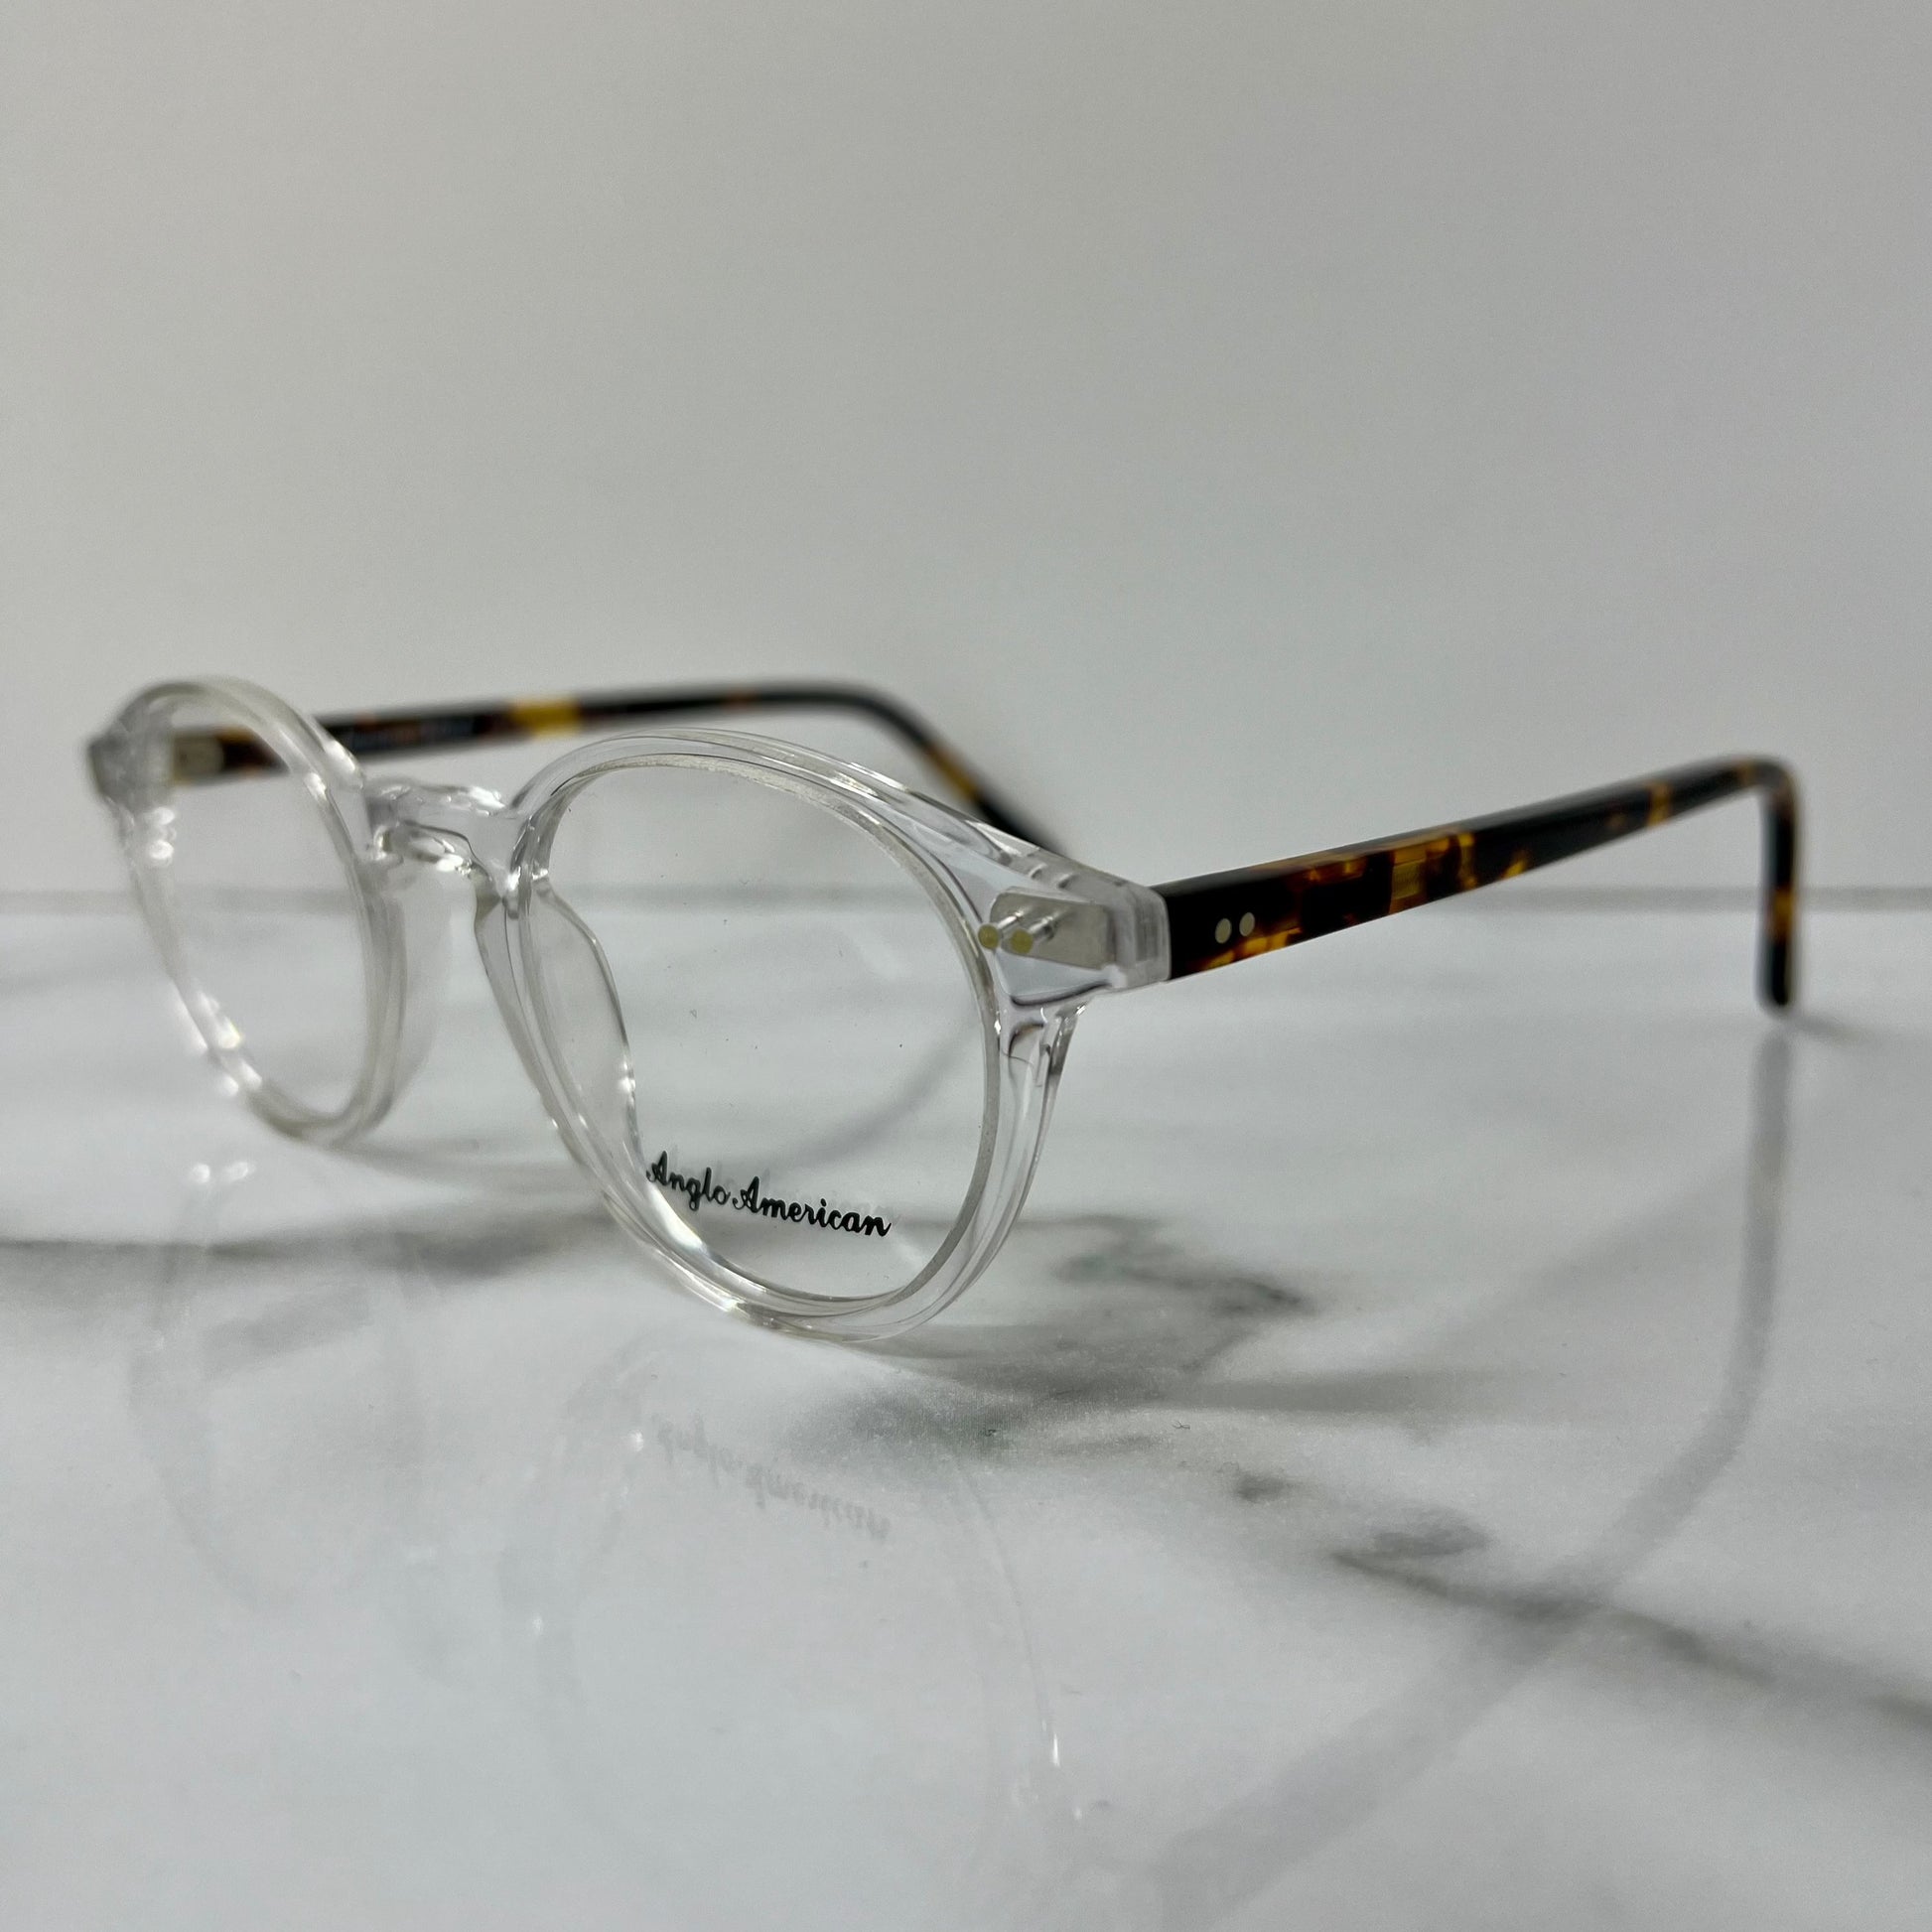 Anglo American 406 Optical Glasses Clear Tortoise Shell England Eyeglasses